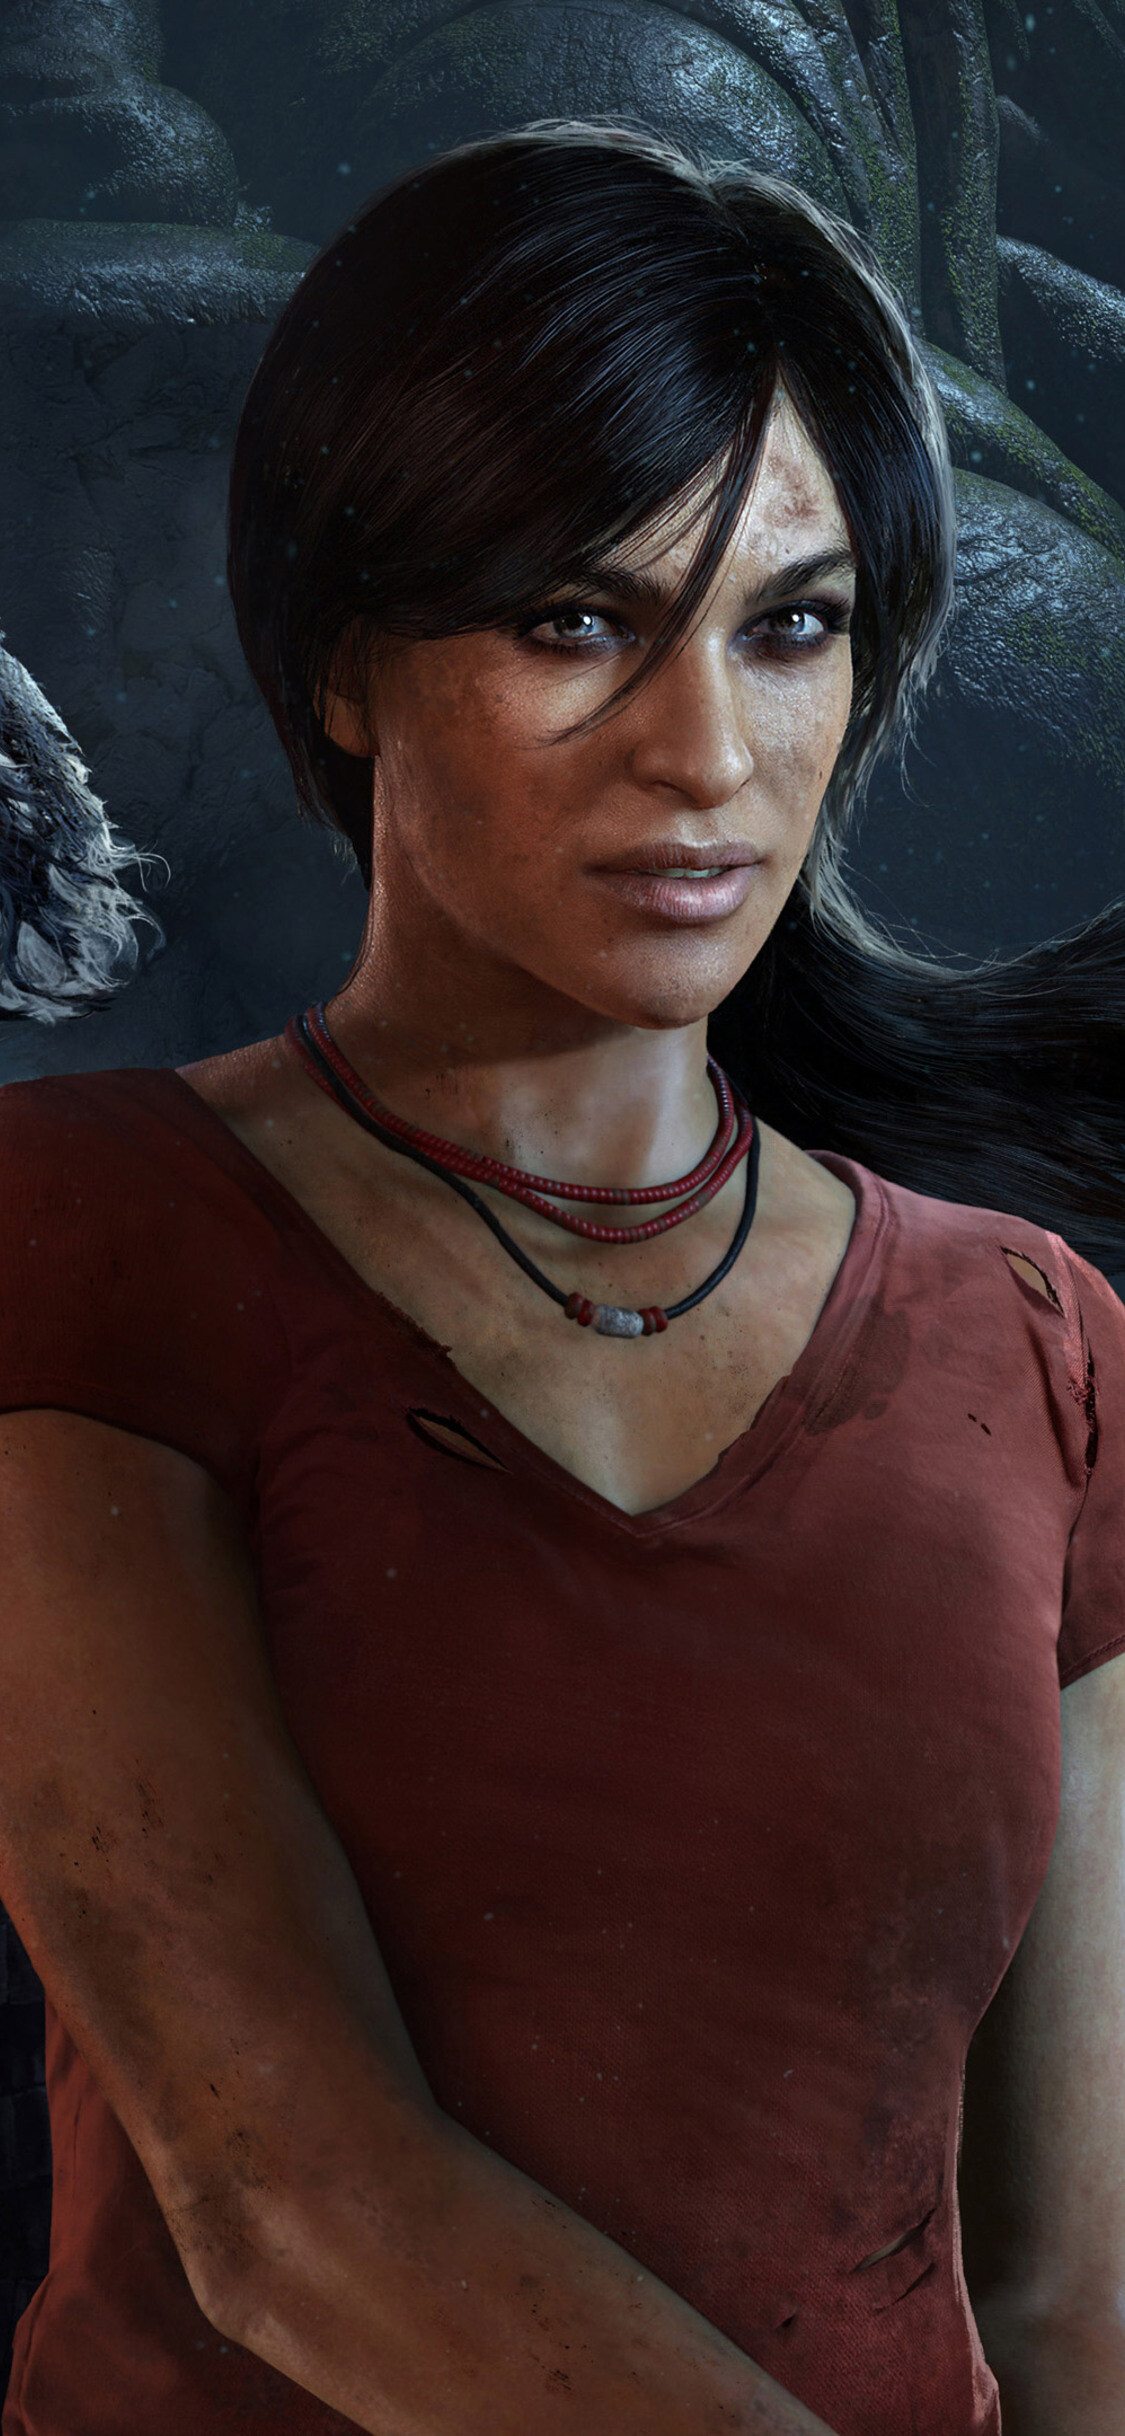 Uncharted: Chloe, like series protagonist Nathan Drake, is a treasure hunter. 1130x2440 HD Wallpaper.